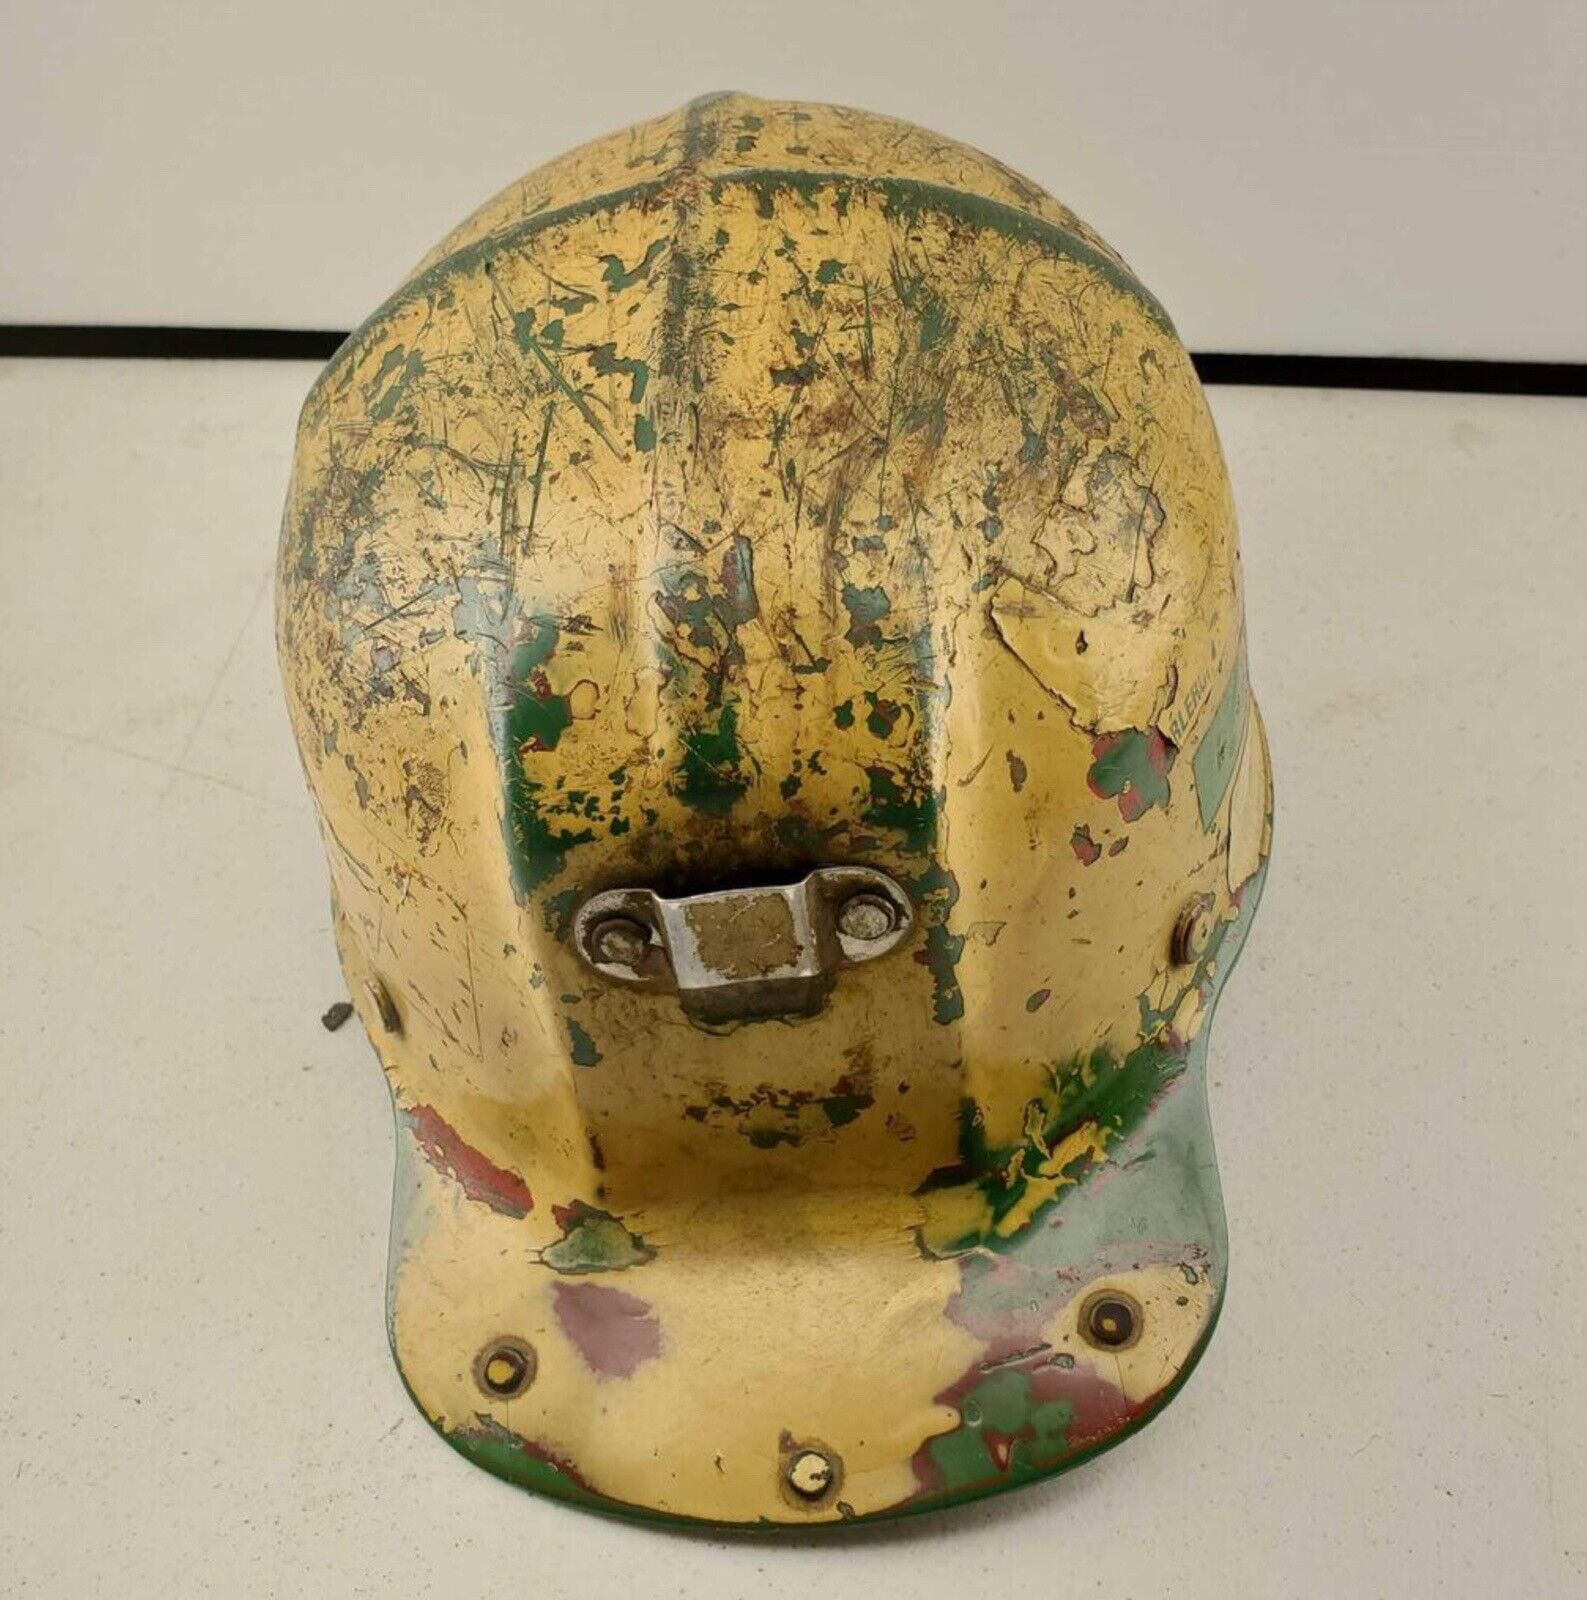 MSA Comfo-Cap Coal Miners Protective Helmet, Model ANSI Z89.1, 1969 Class Vtg